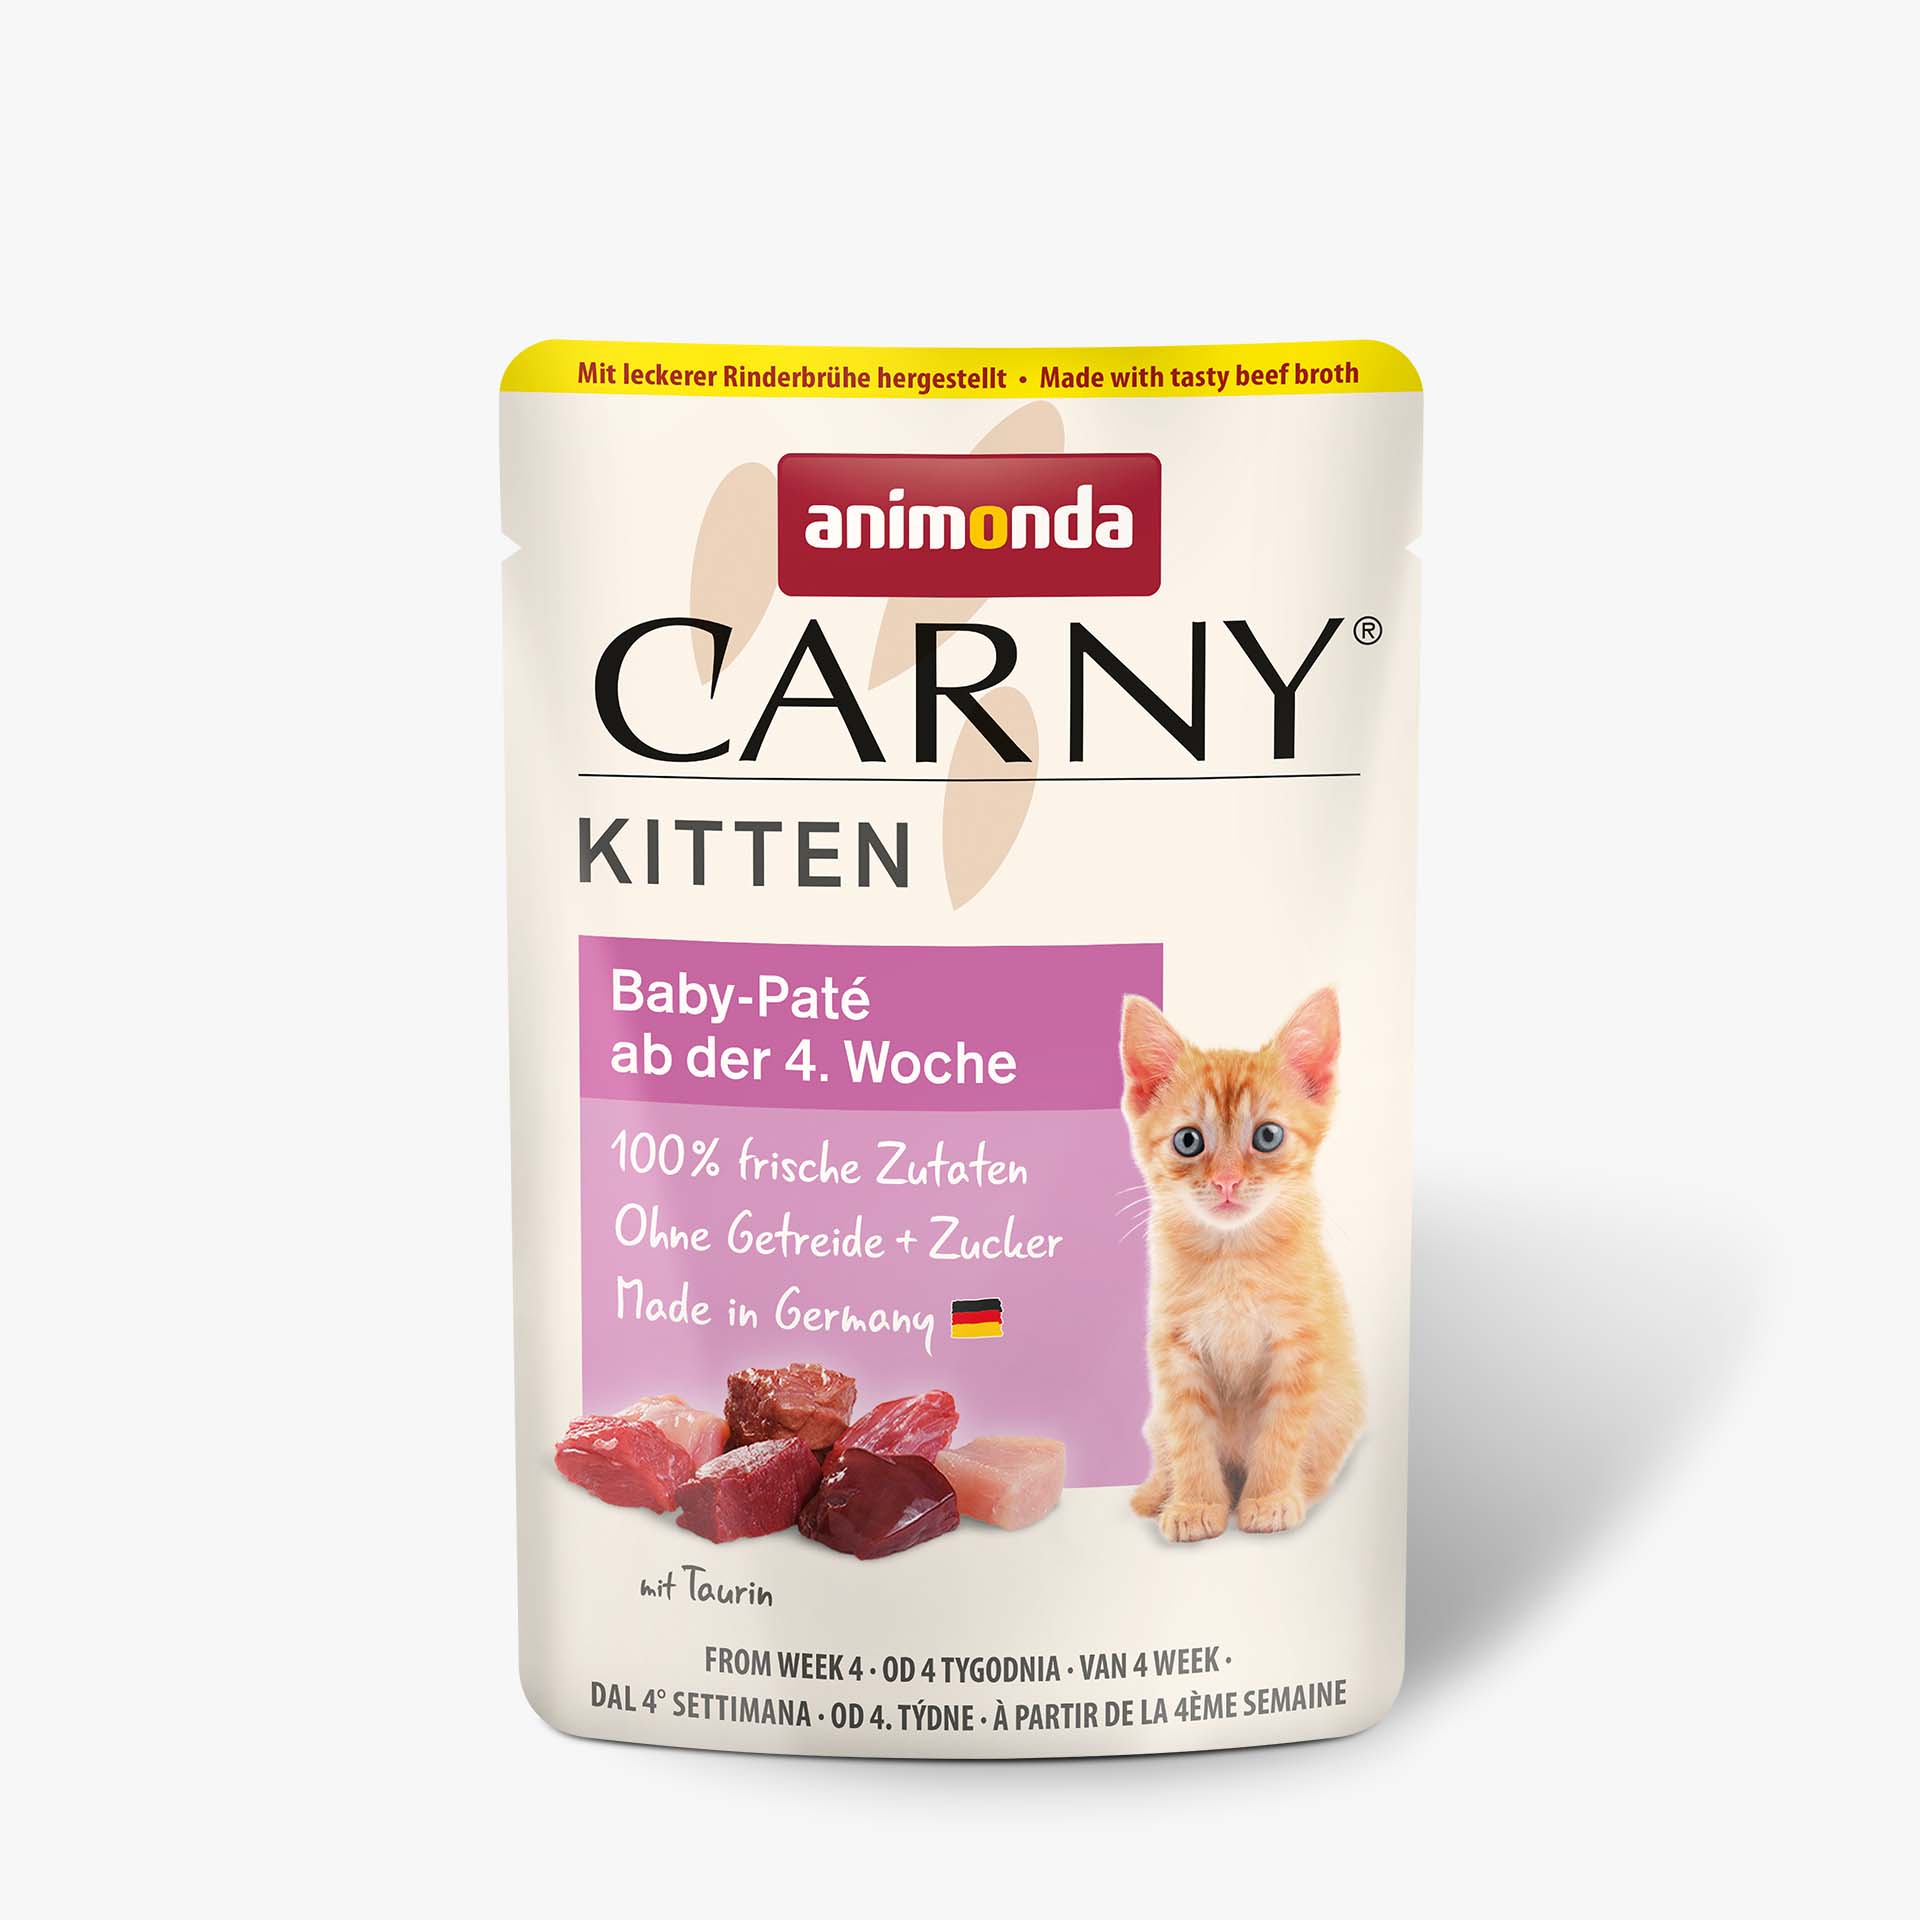 Carny Kitten Baby-Paté